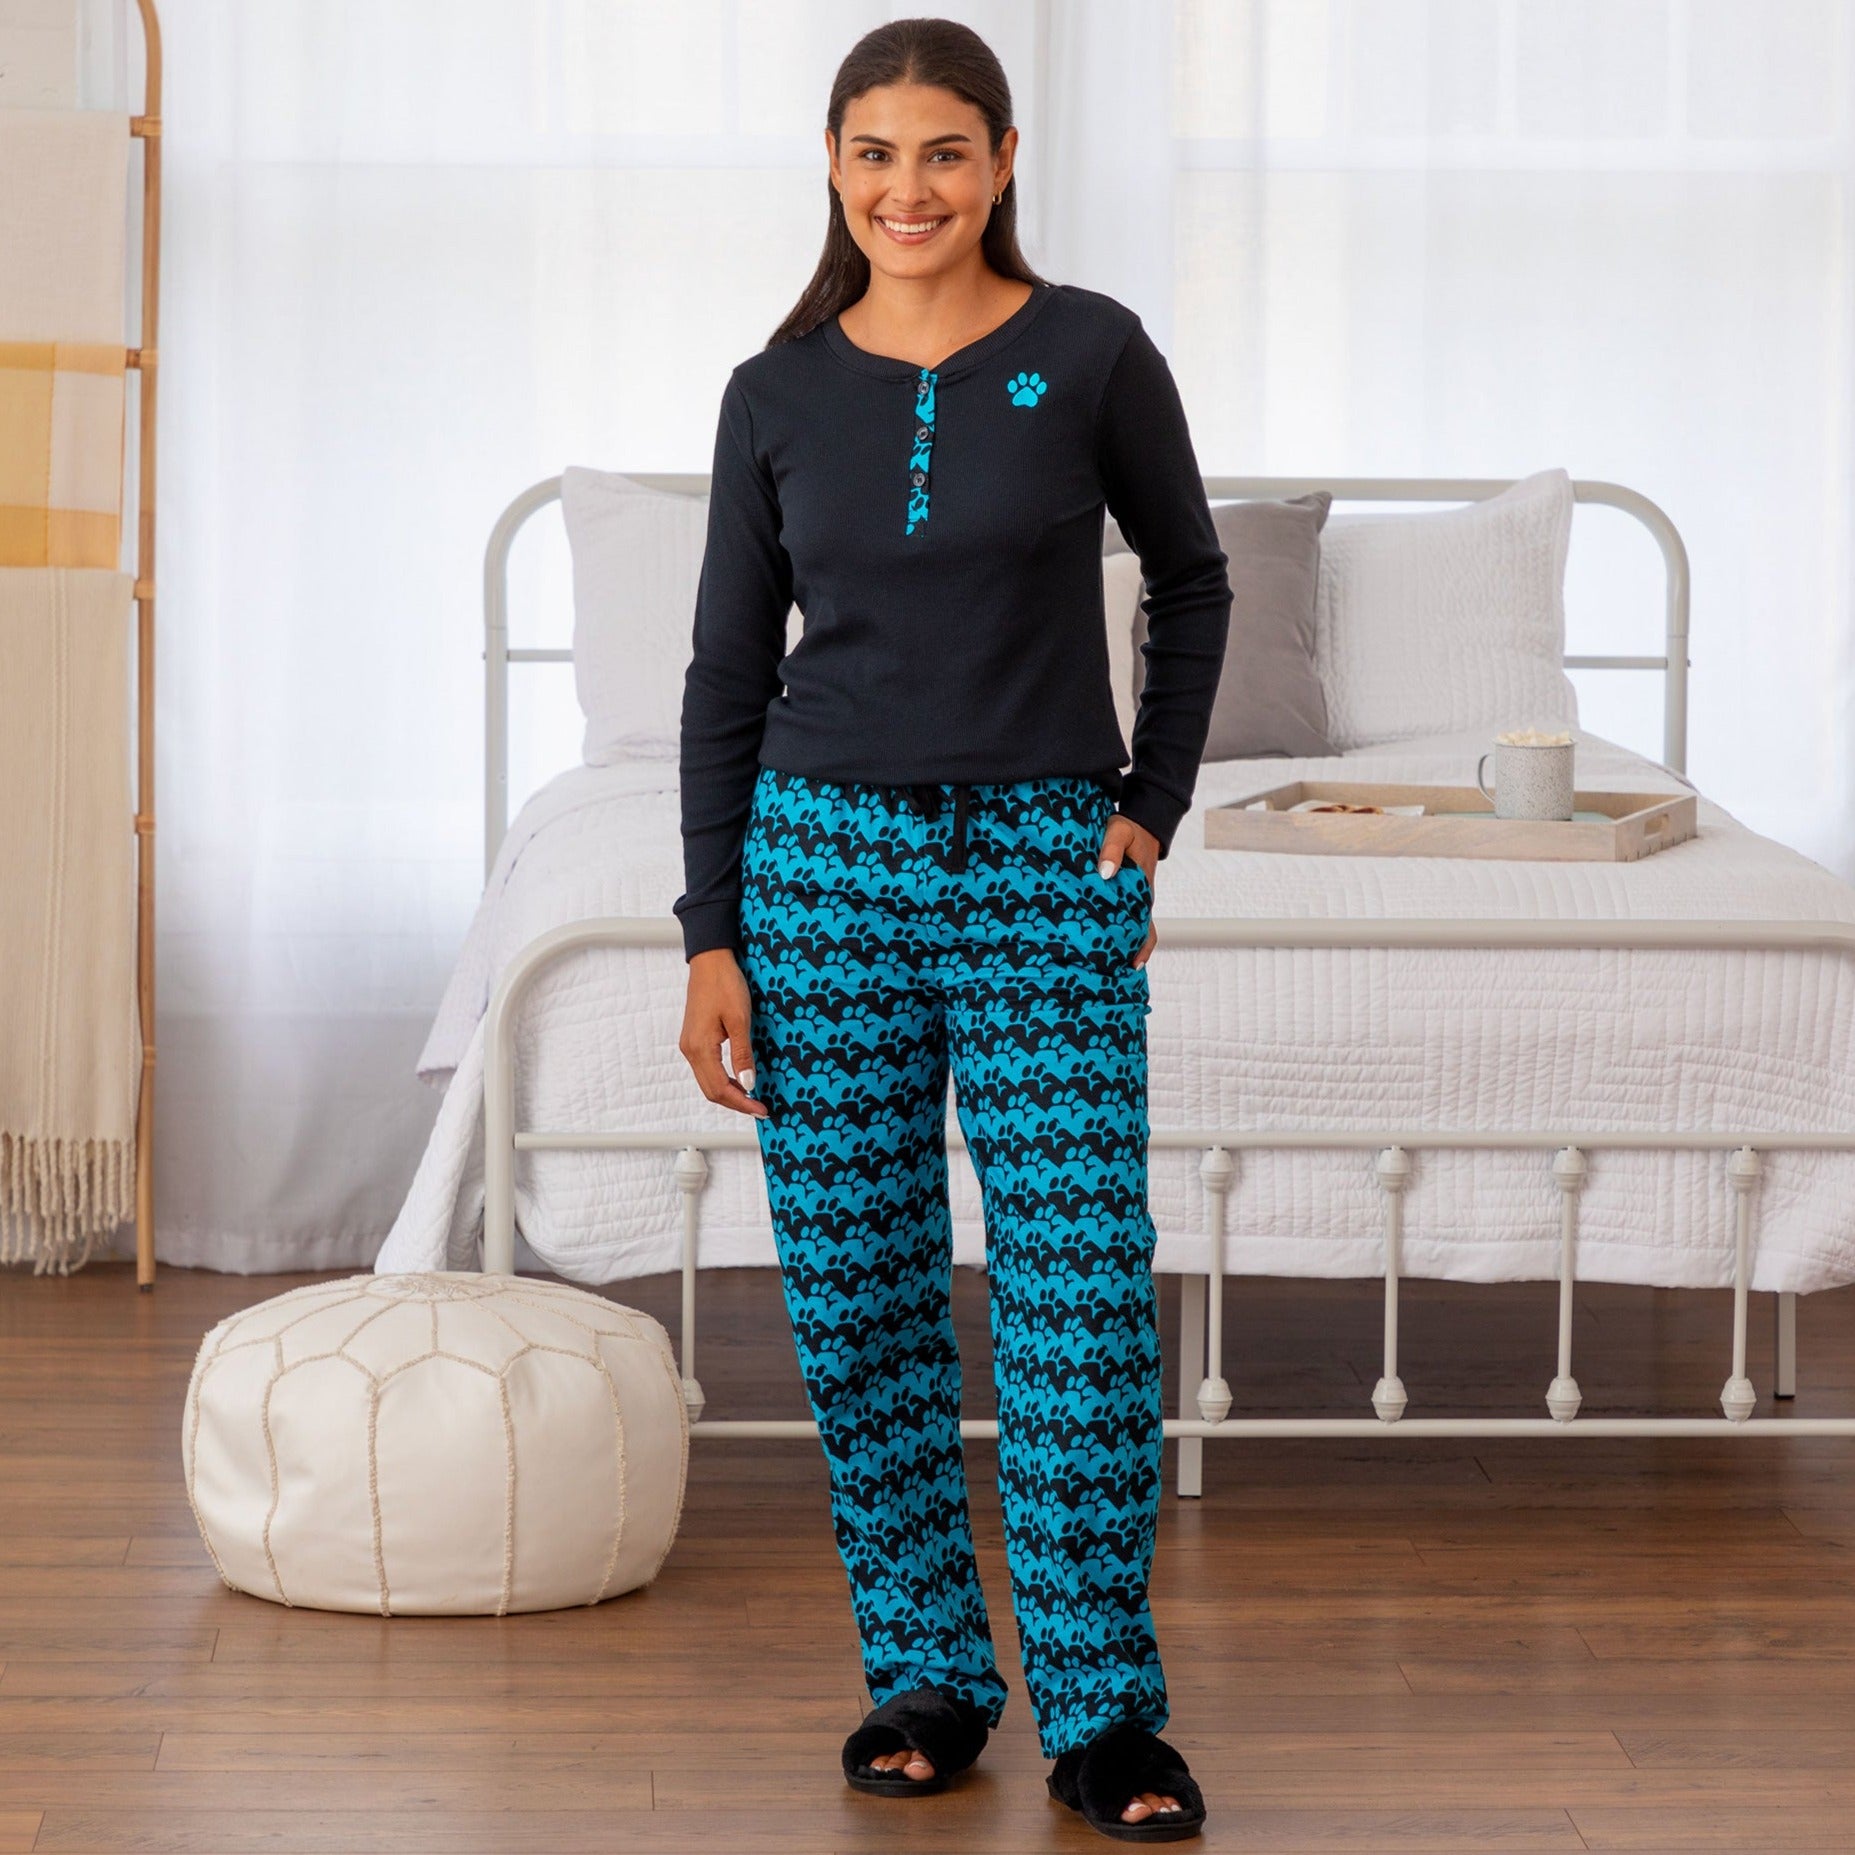 Paw Print Thermal & Flannel Pajama Set - Paw Print Houndstooth - S